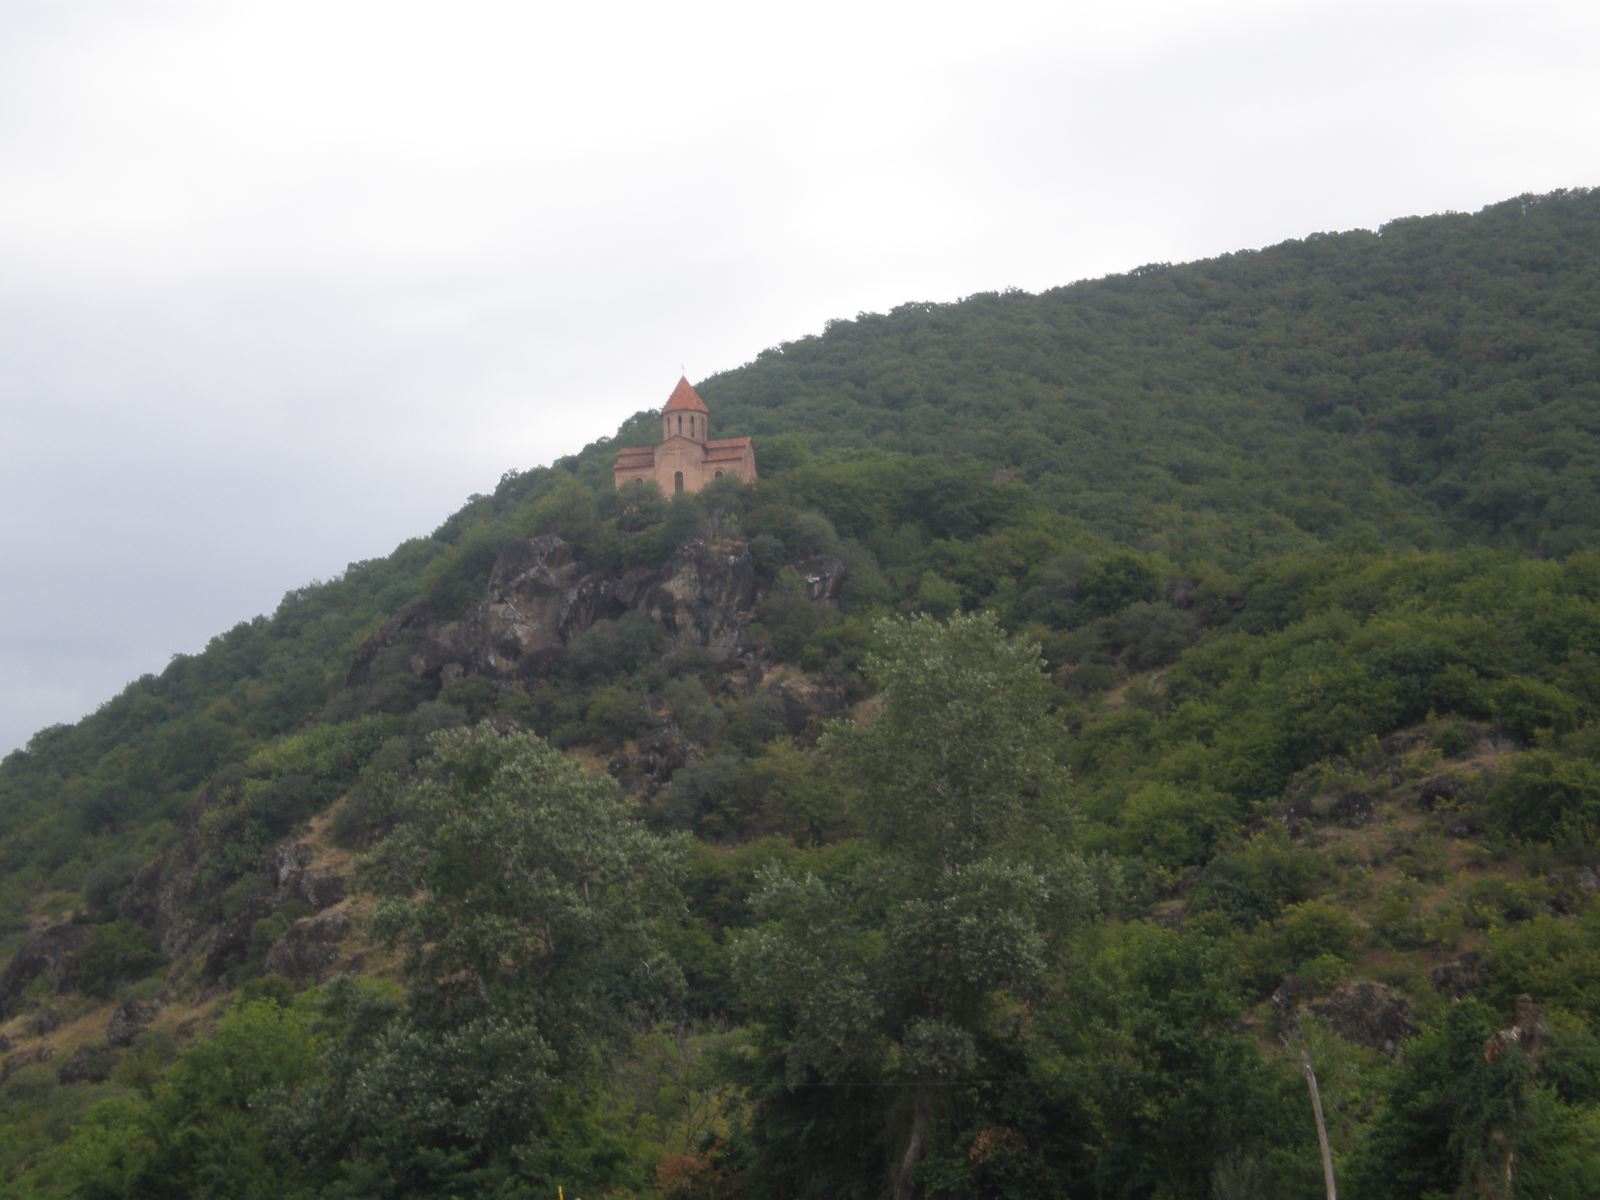 Albanian Church on the way from Sheki to Qax